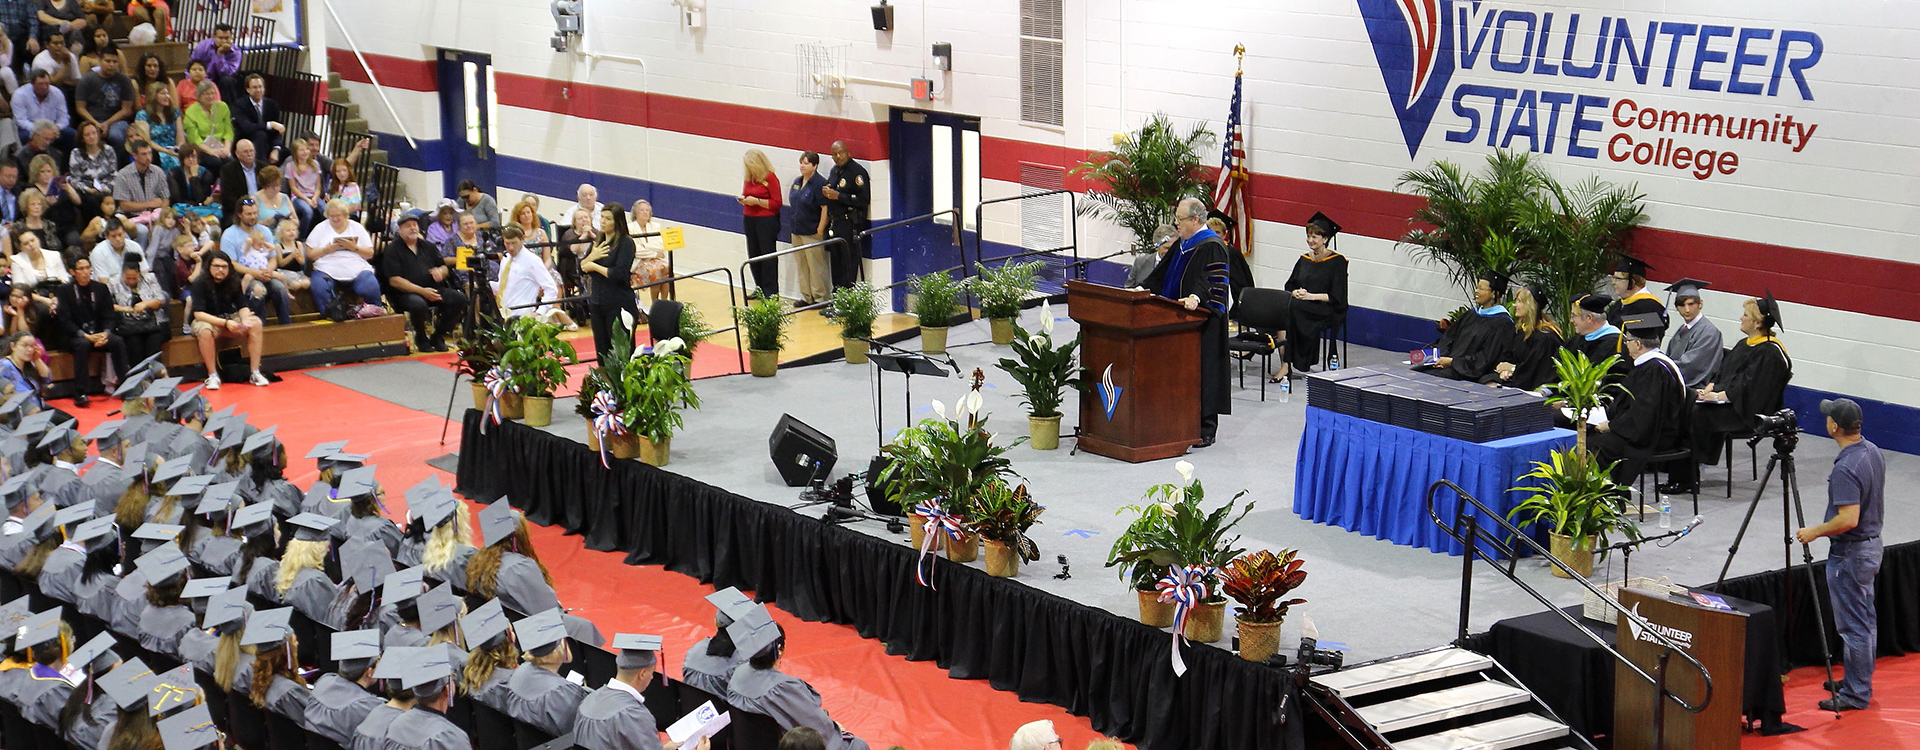 Graduation Ceremony at Vol State